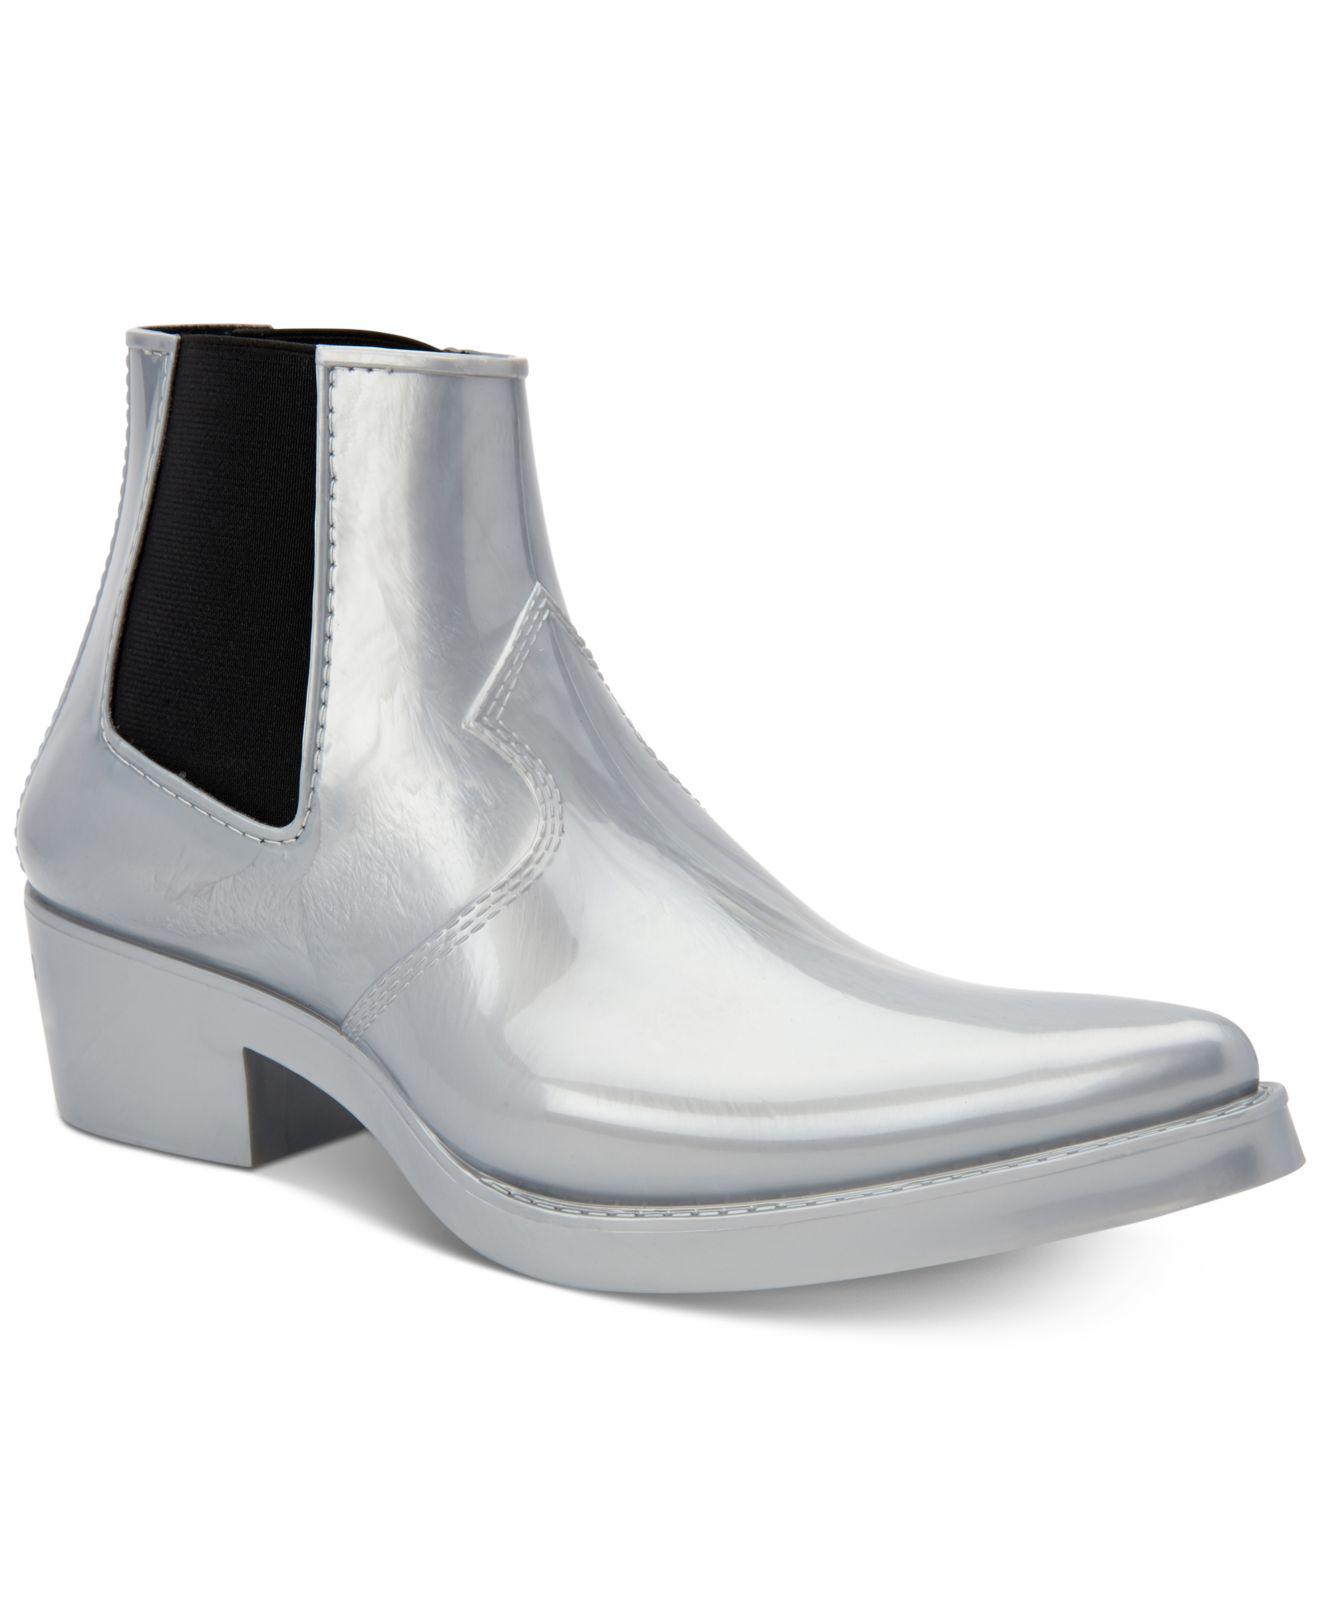 Calvin Klein Rubber Cole Western Chelsea Boots in Metallic for Men - Lyst